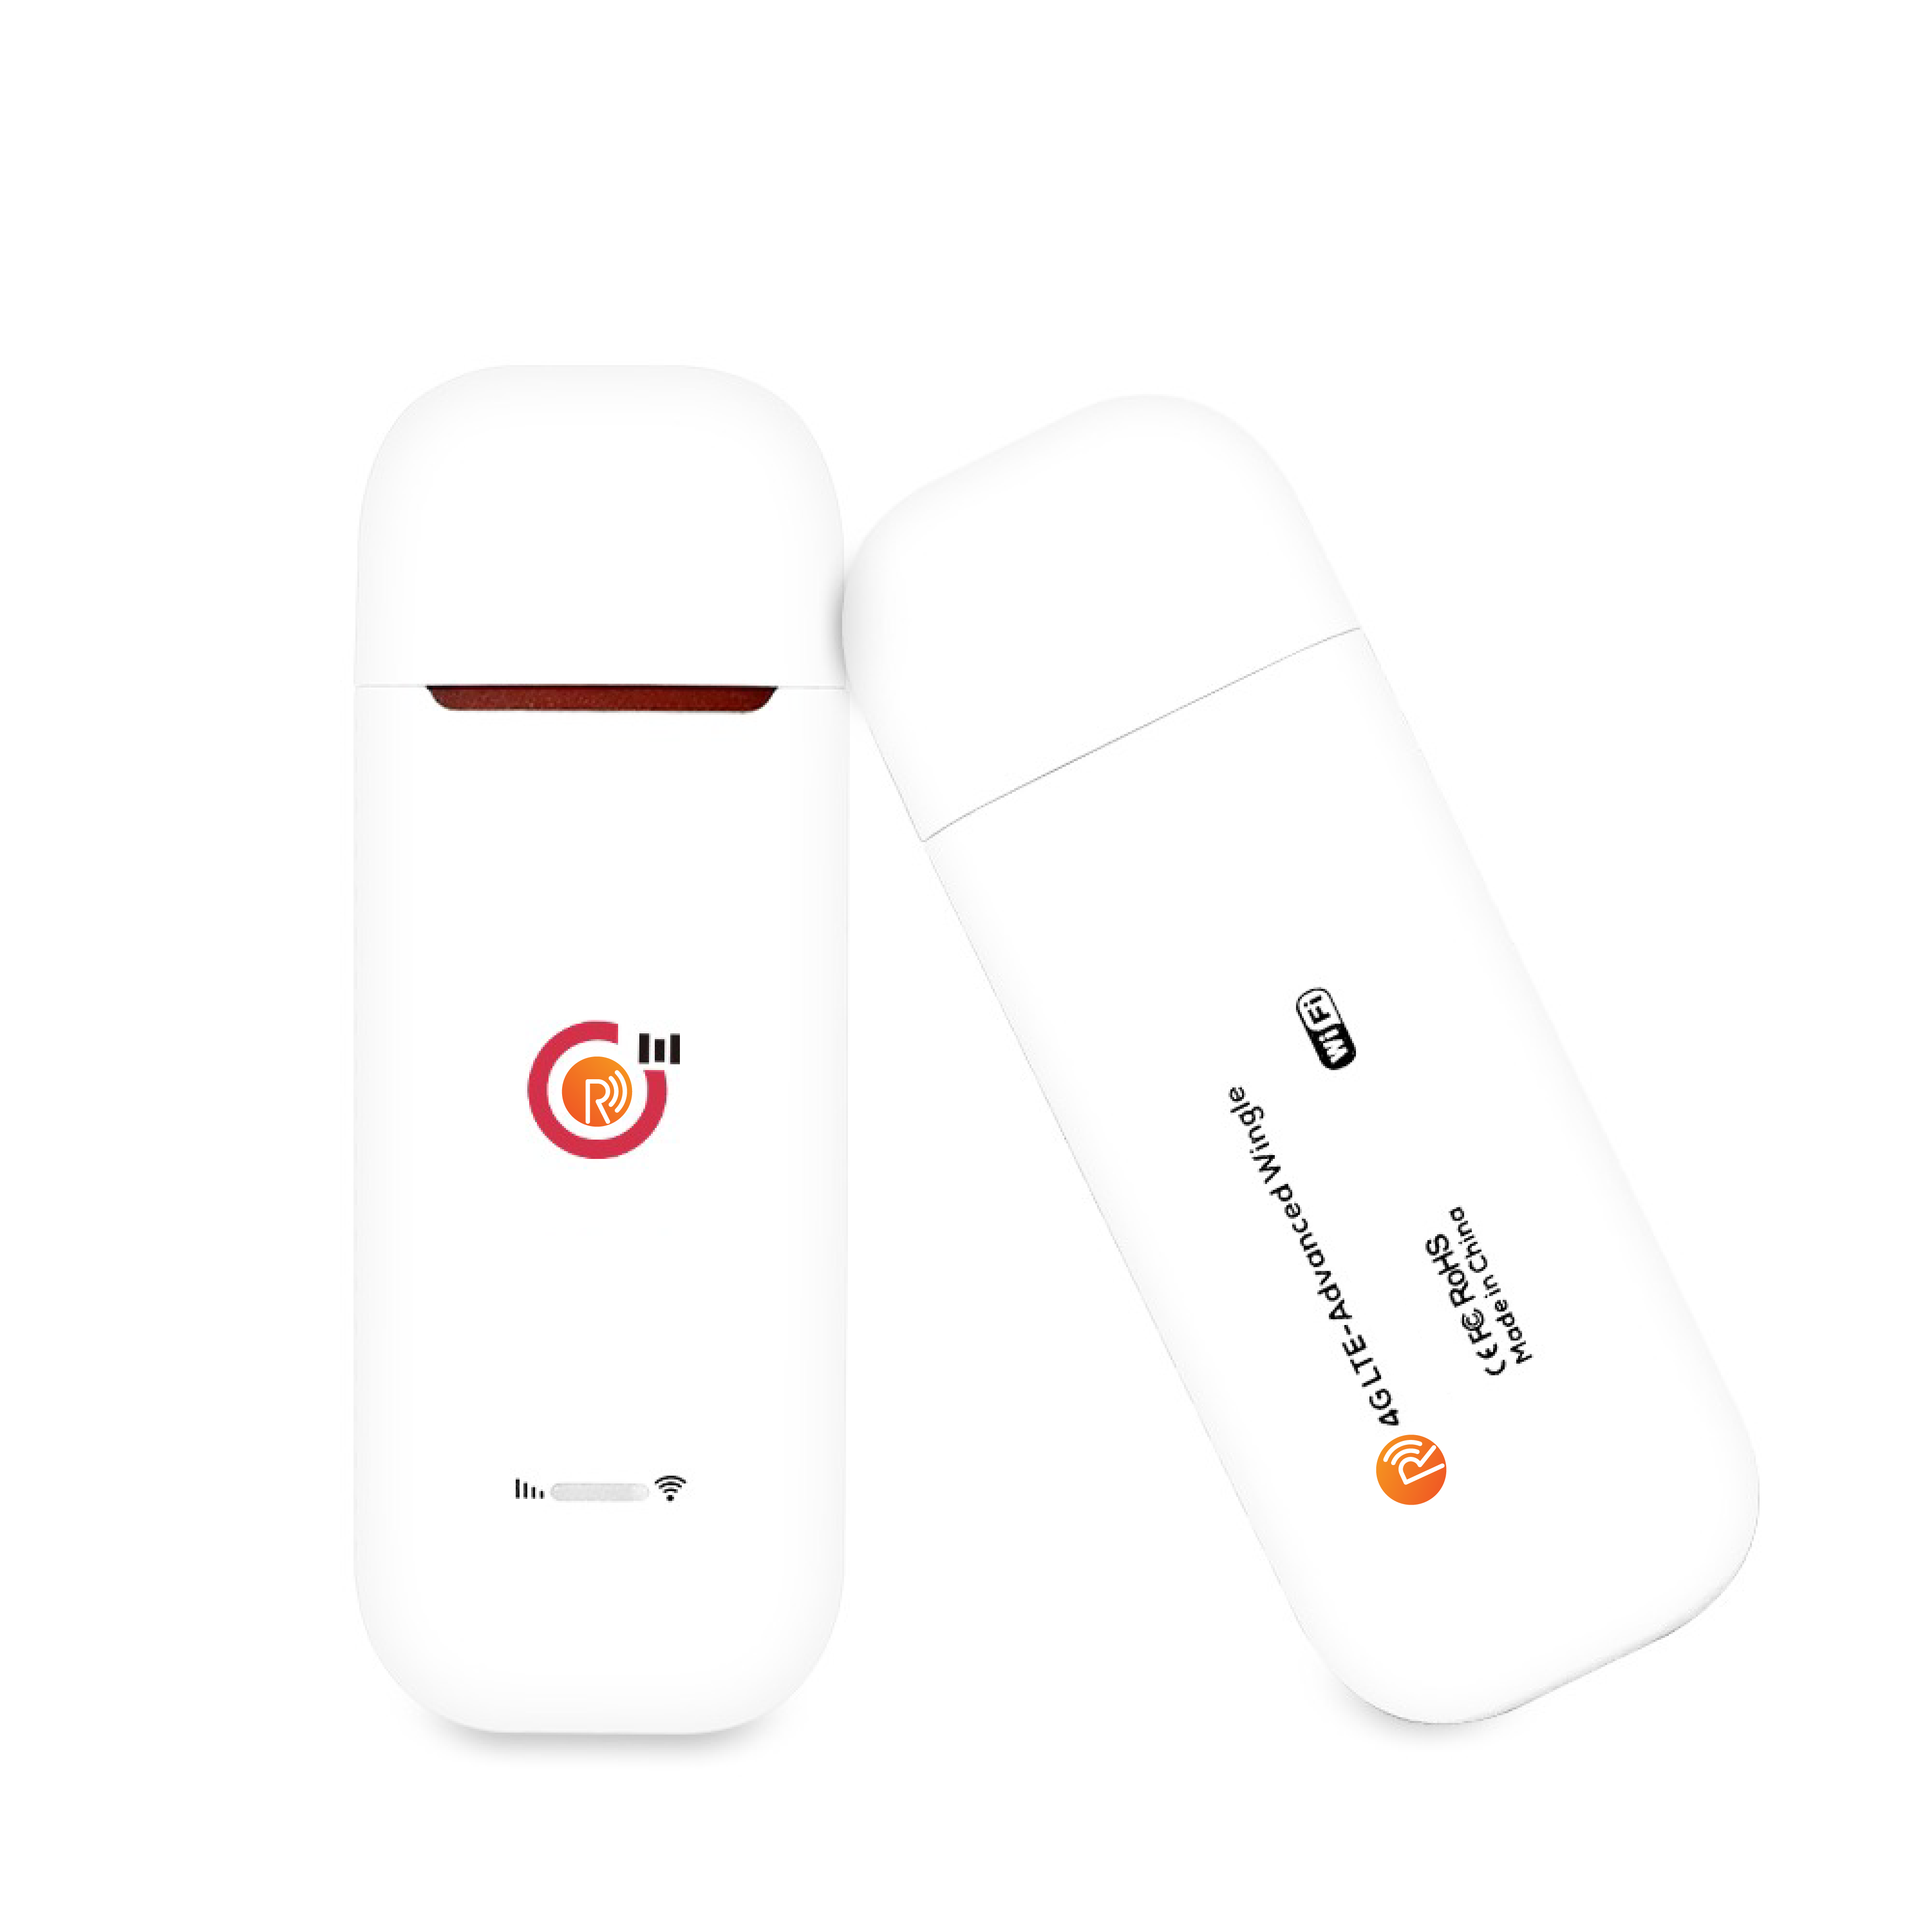 4G USB modem & Wi-Fi Hotspot with SIM Card